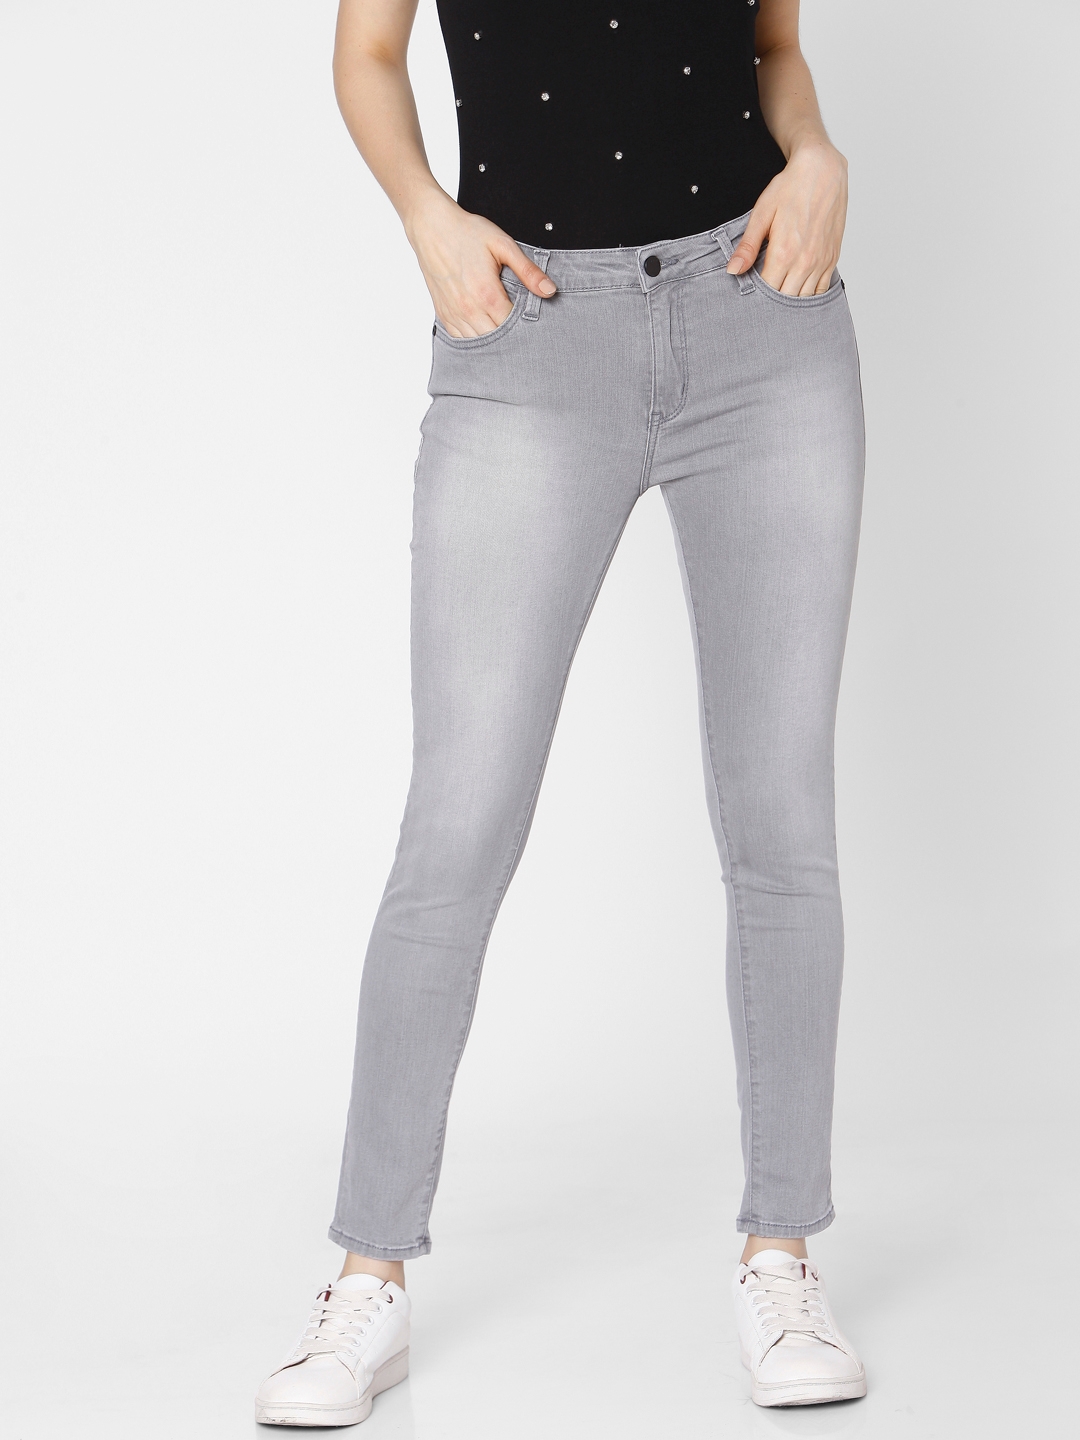 spykar | Women's Grey Cotton Solid Skinny Jeans 1